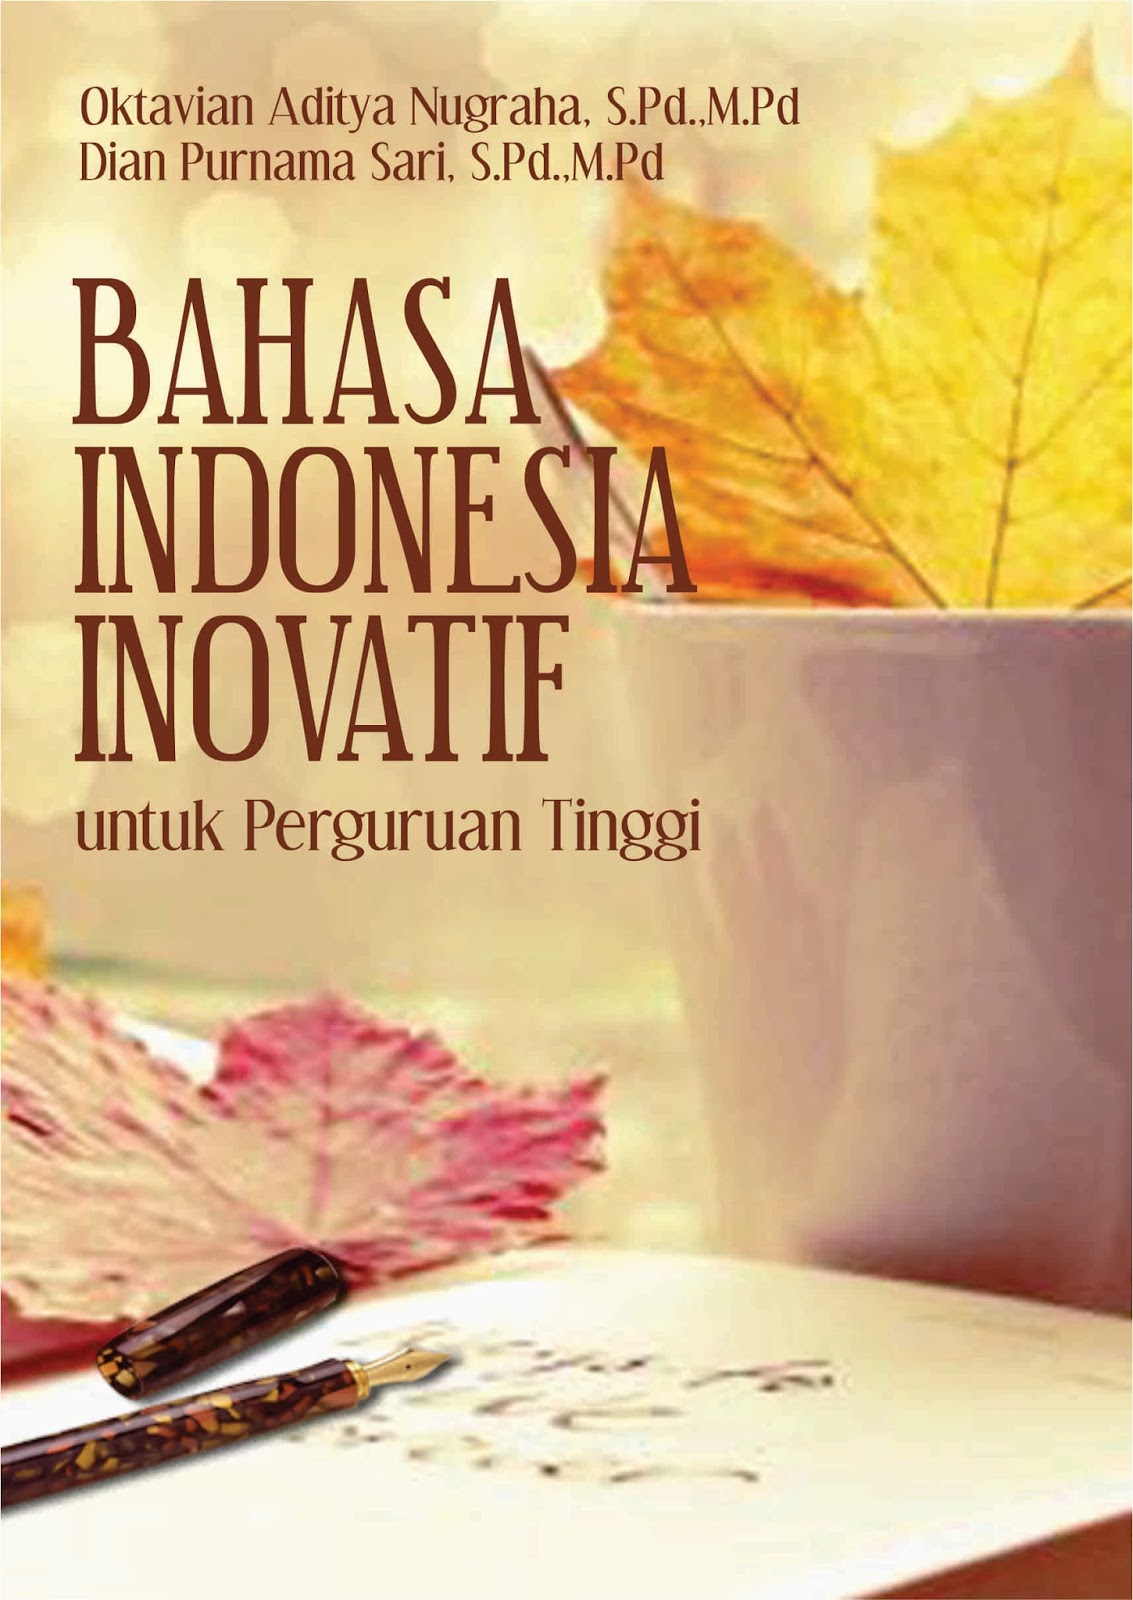 bukutujju: Bahasa Indonesia Inovatif untuk Perguruan Tinggi - Oktavian